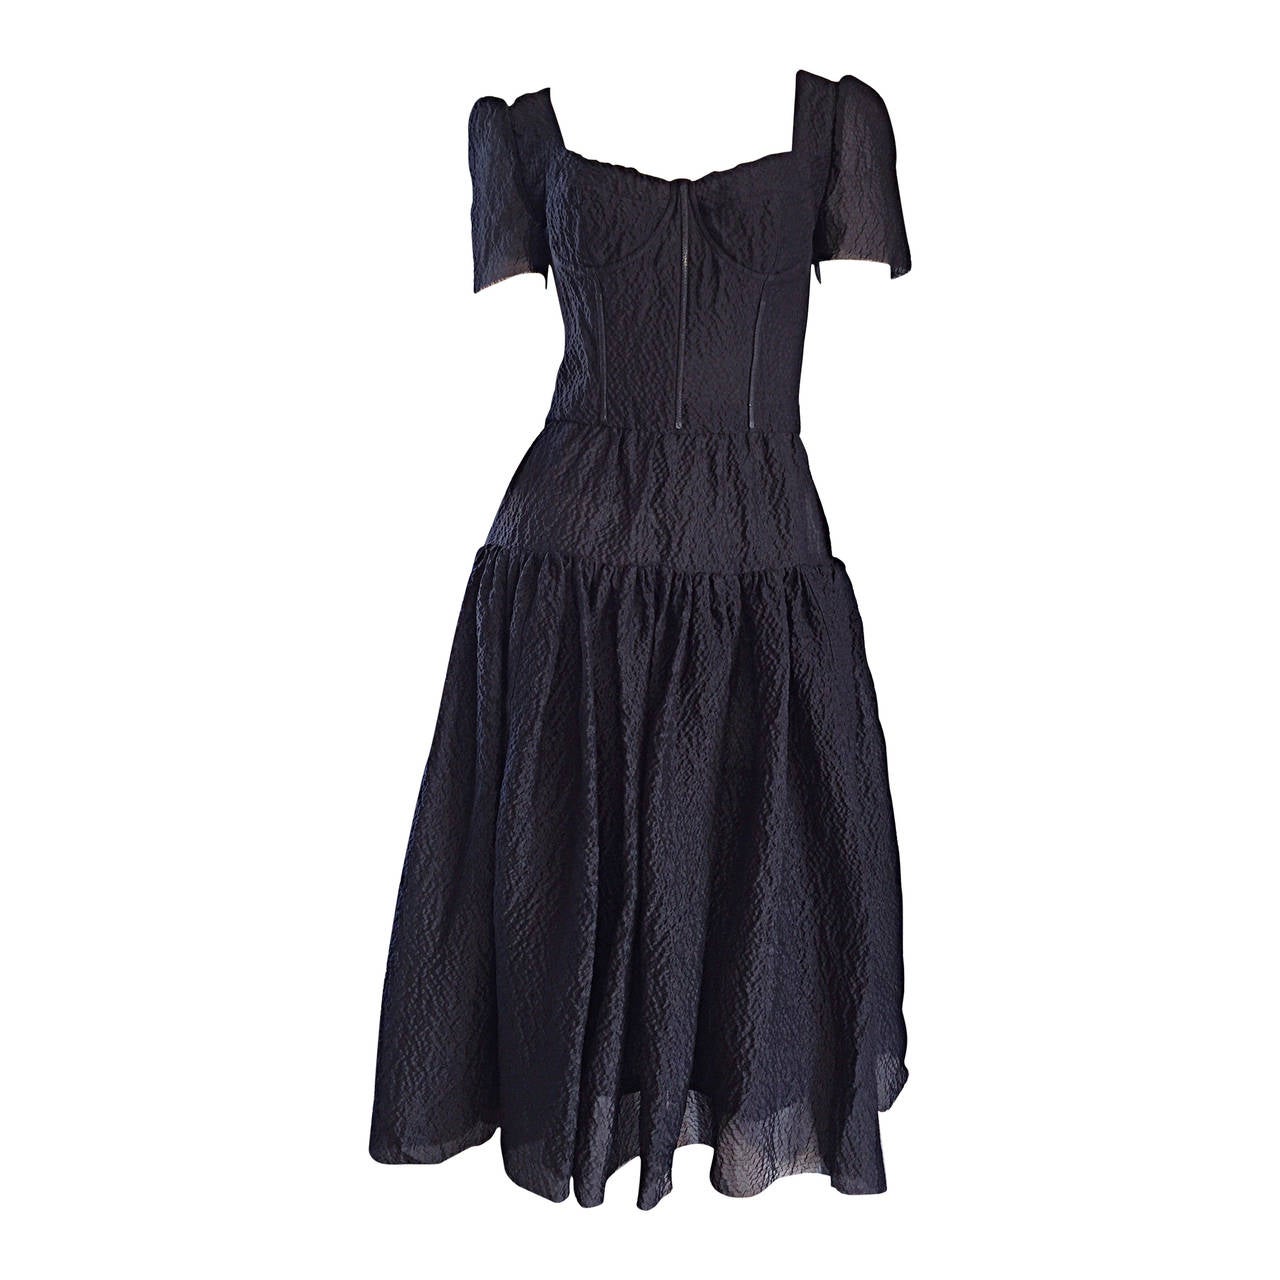 New Dolce and Gabbana Black Silk Bustier Runway Dress from 